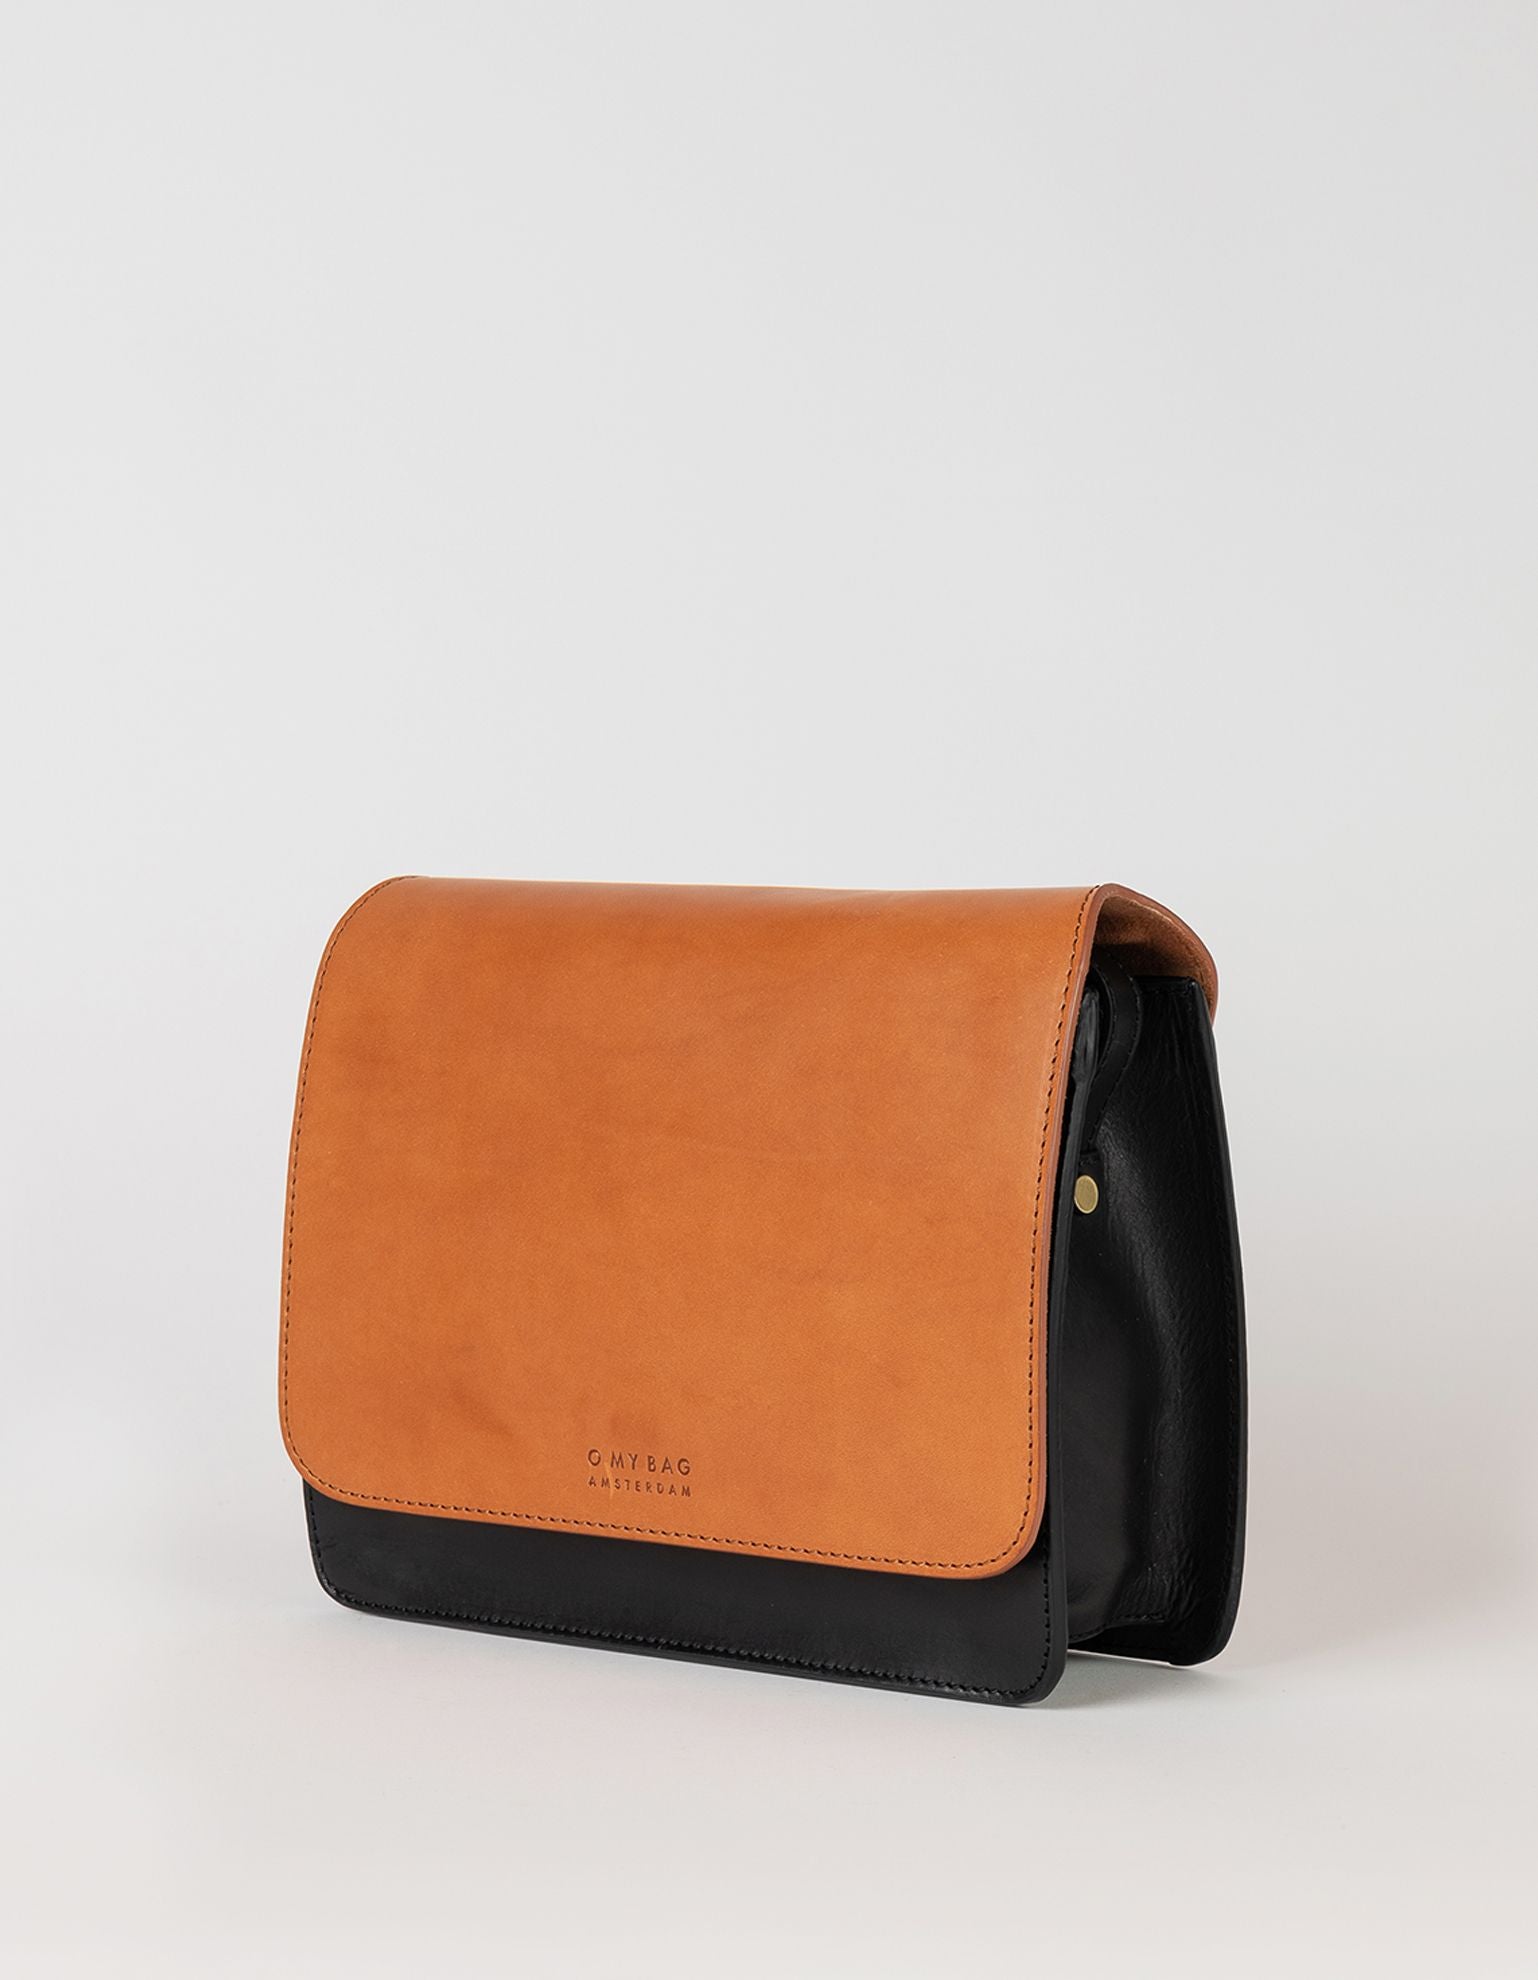 Audrey - black & cognac classic leather bag, side image of bag